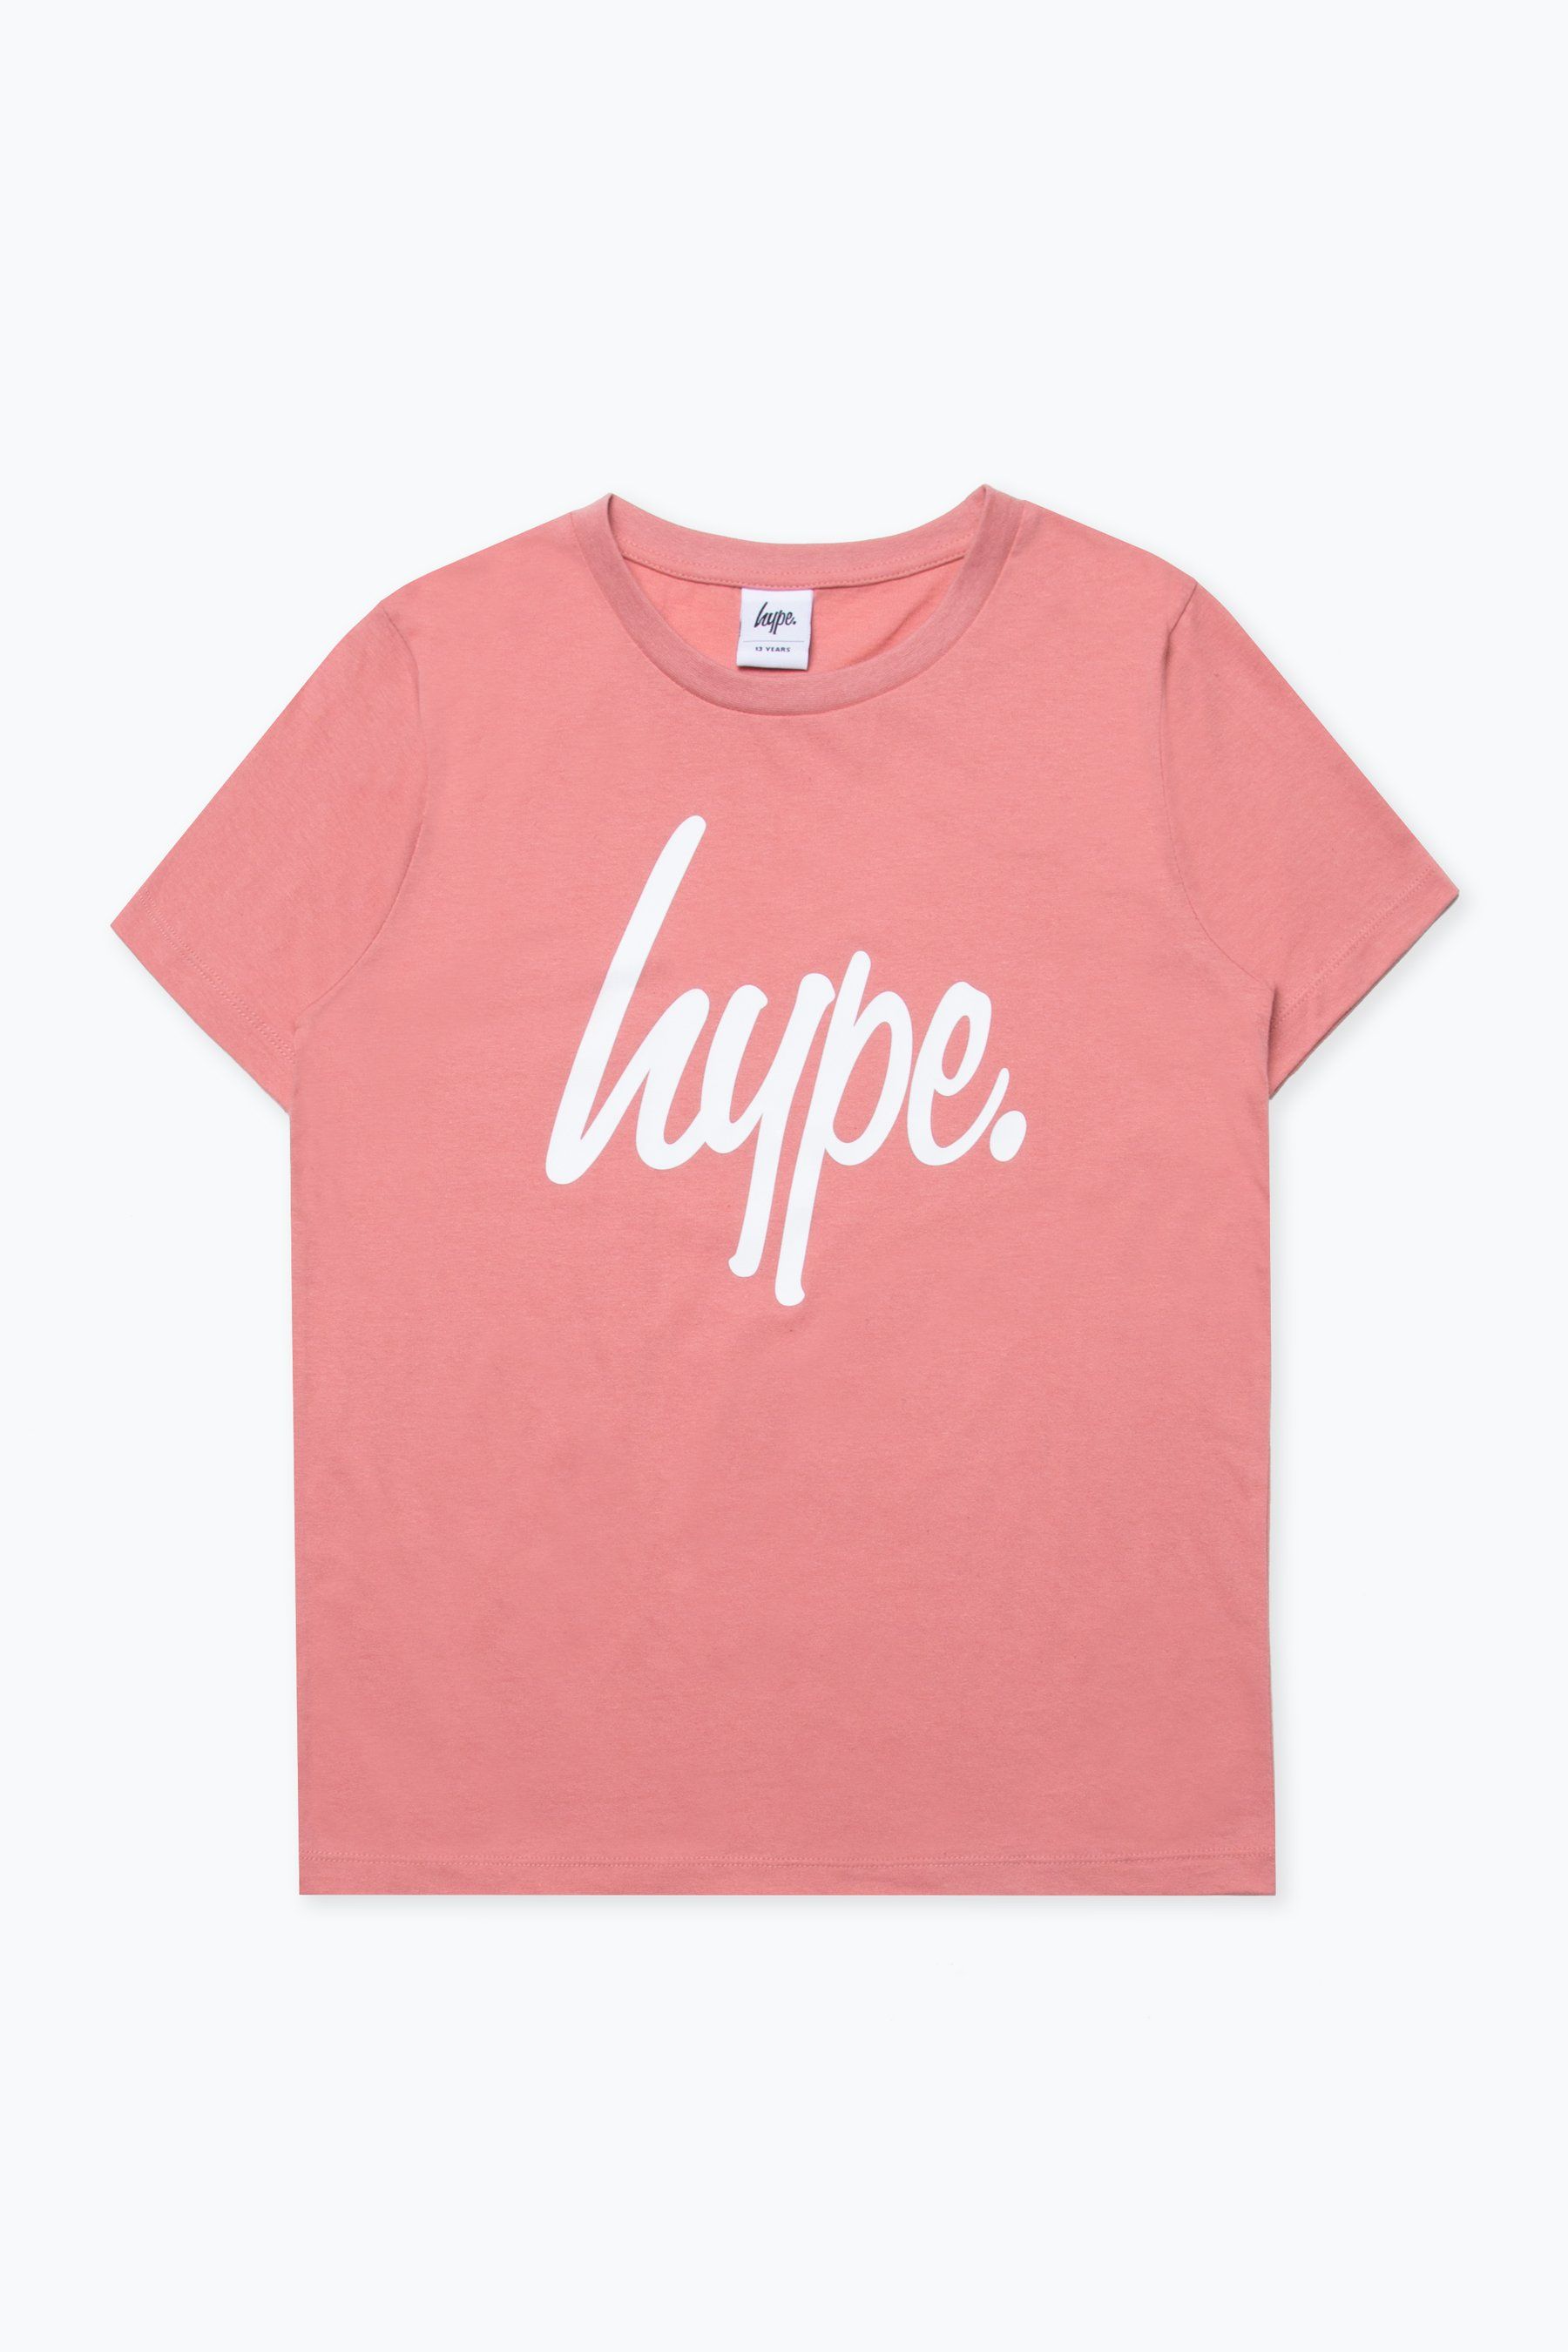 Hype Three Pack Pink/Black/Space Kids T-Shirt